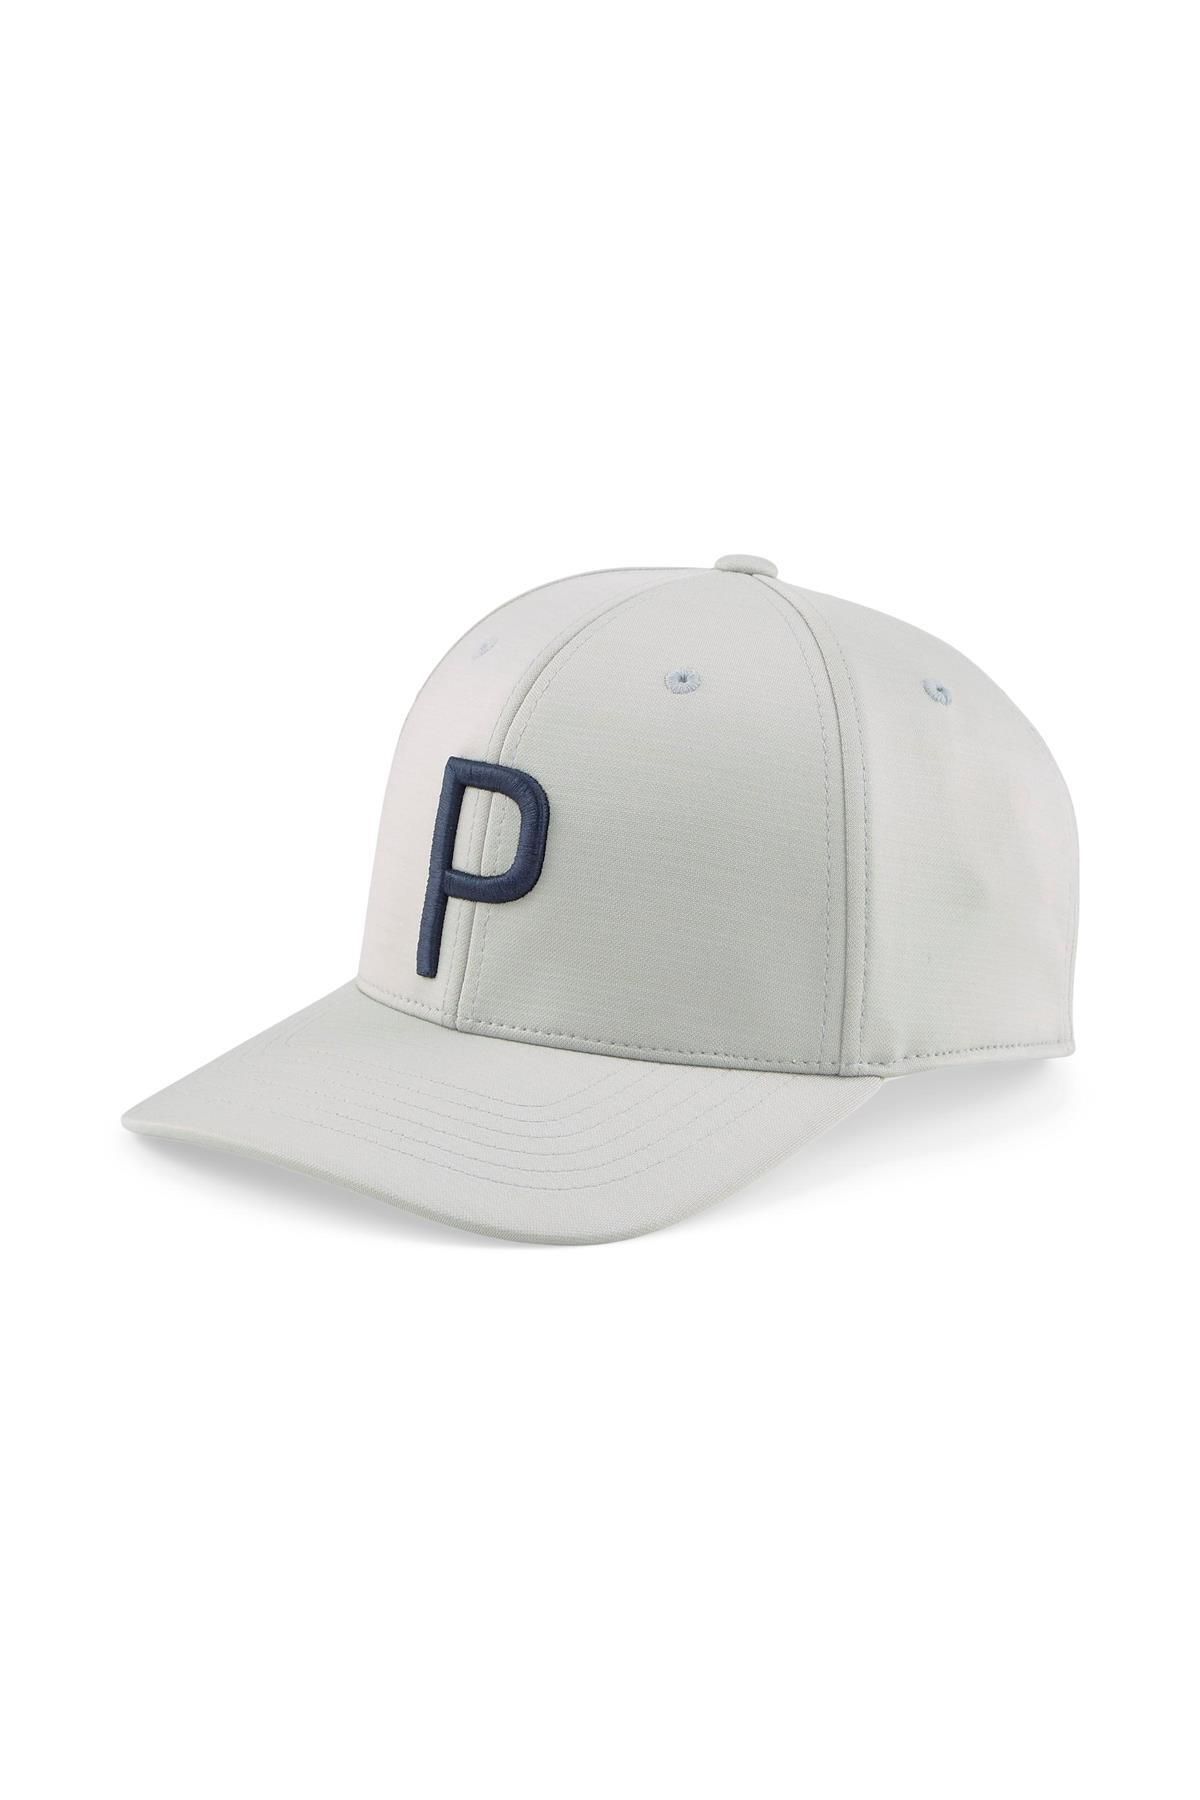 Puma P Cap - Unisex P Logolu Şapka